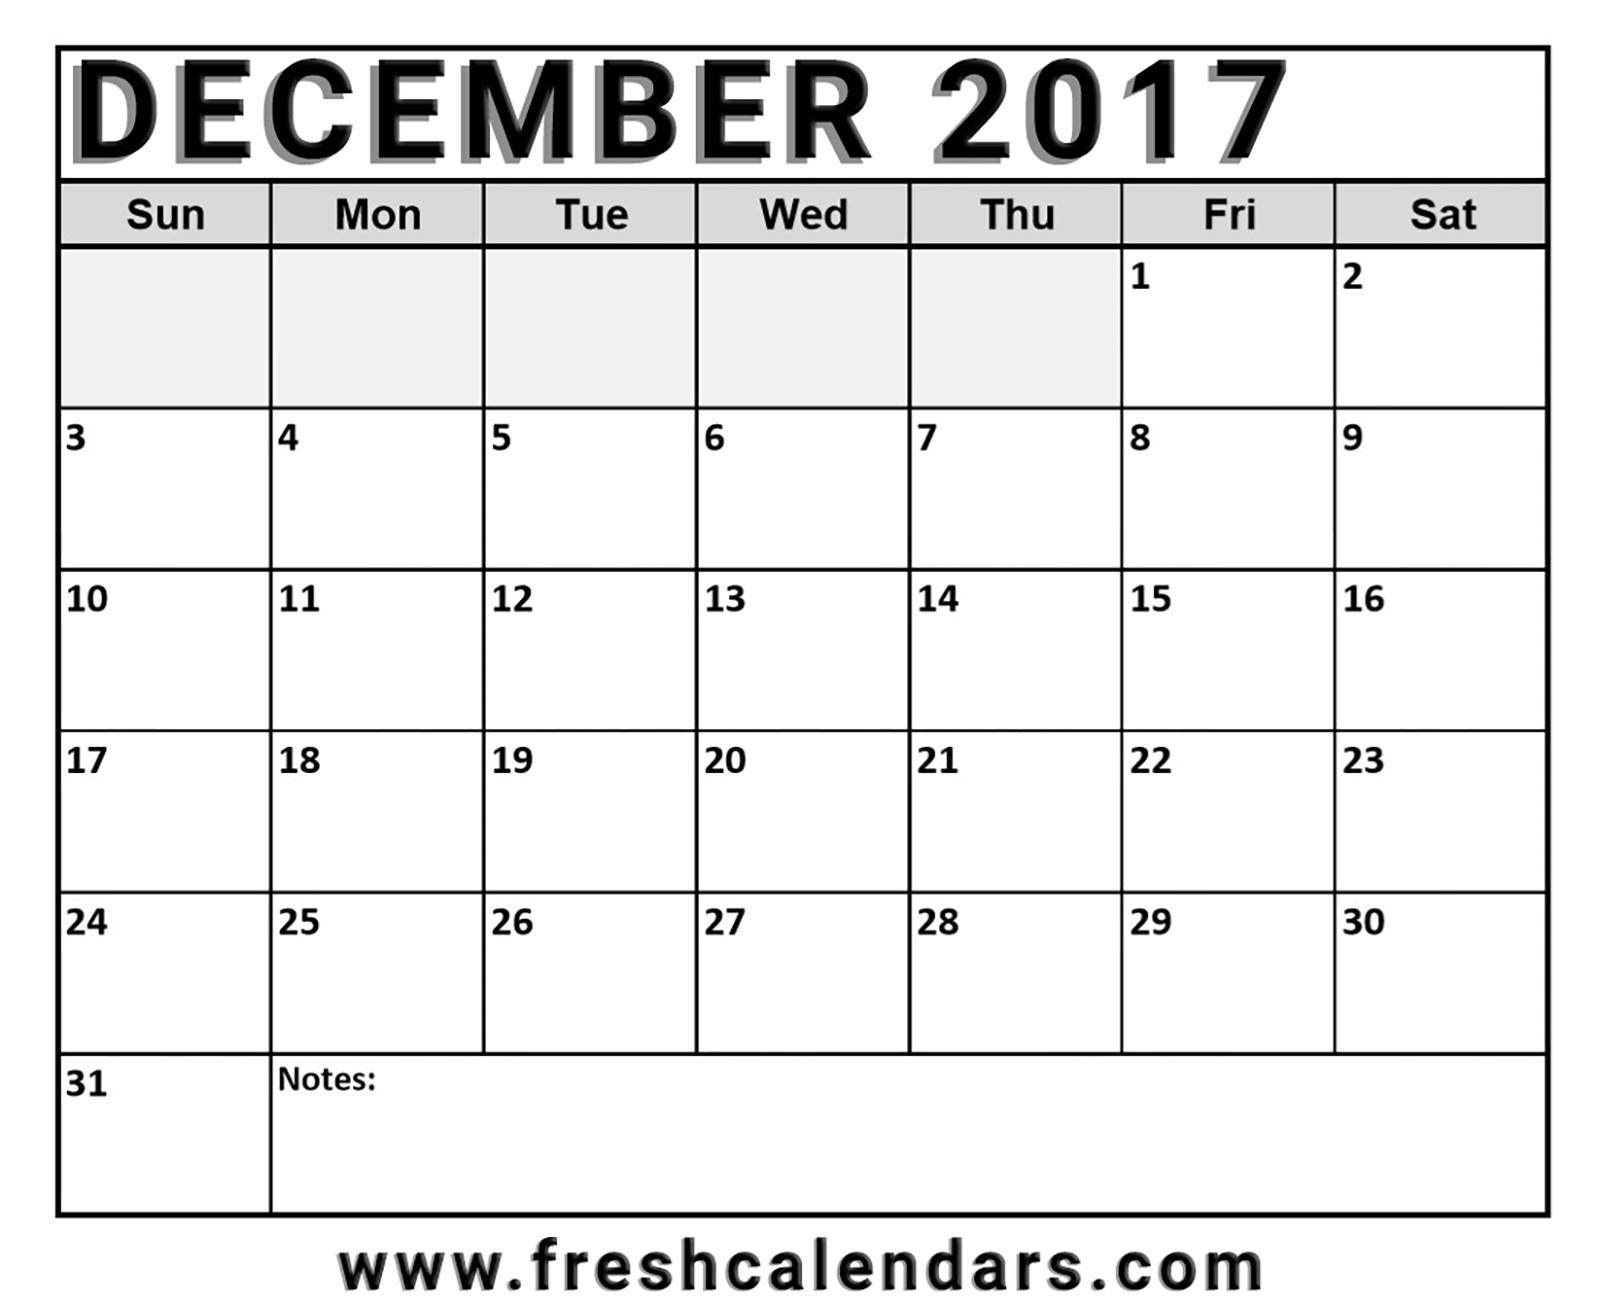 046 Monthly Calendar Template Word December Printable Pdf within December 2017 Calendar Printable